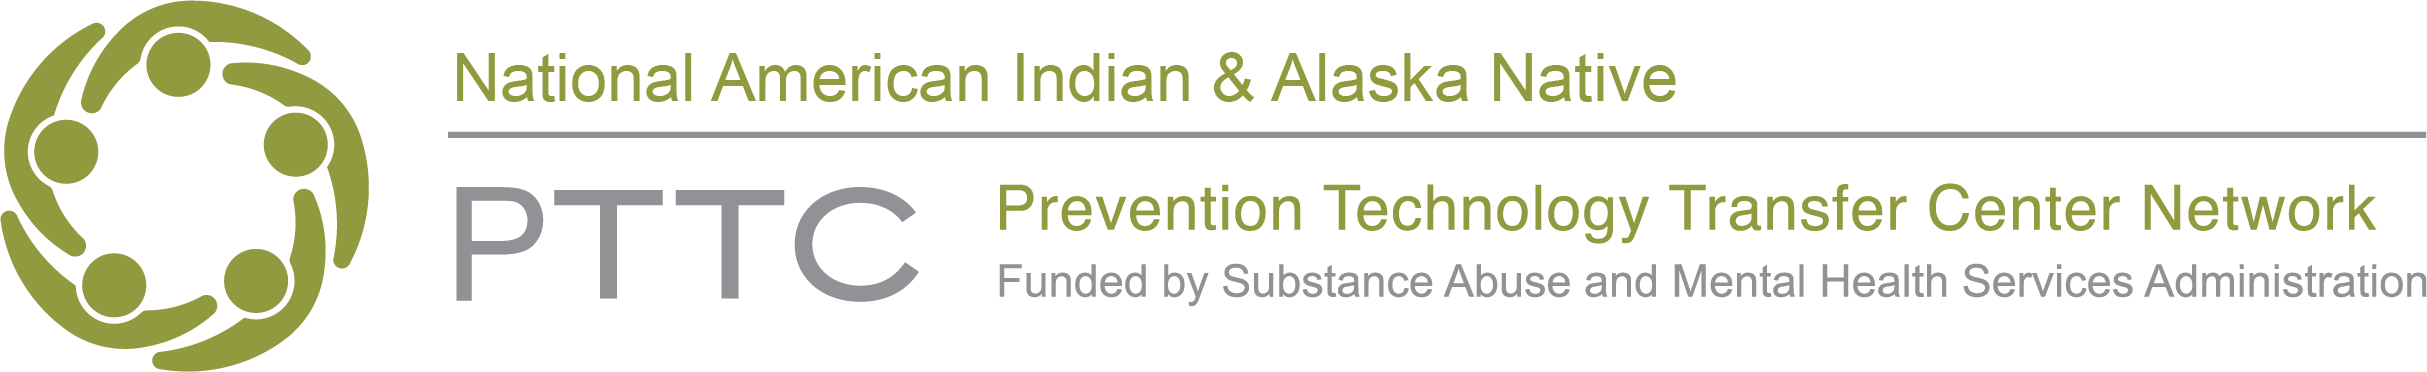 National American Indian and Alaska Native PTTC Logo